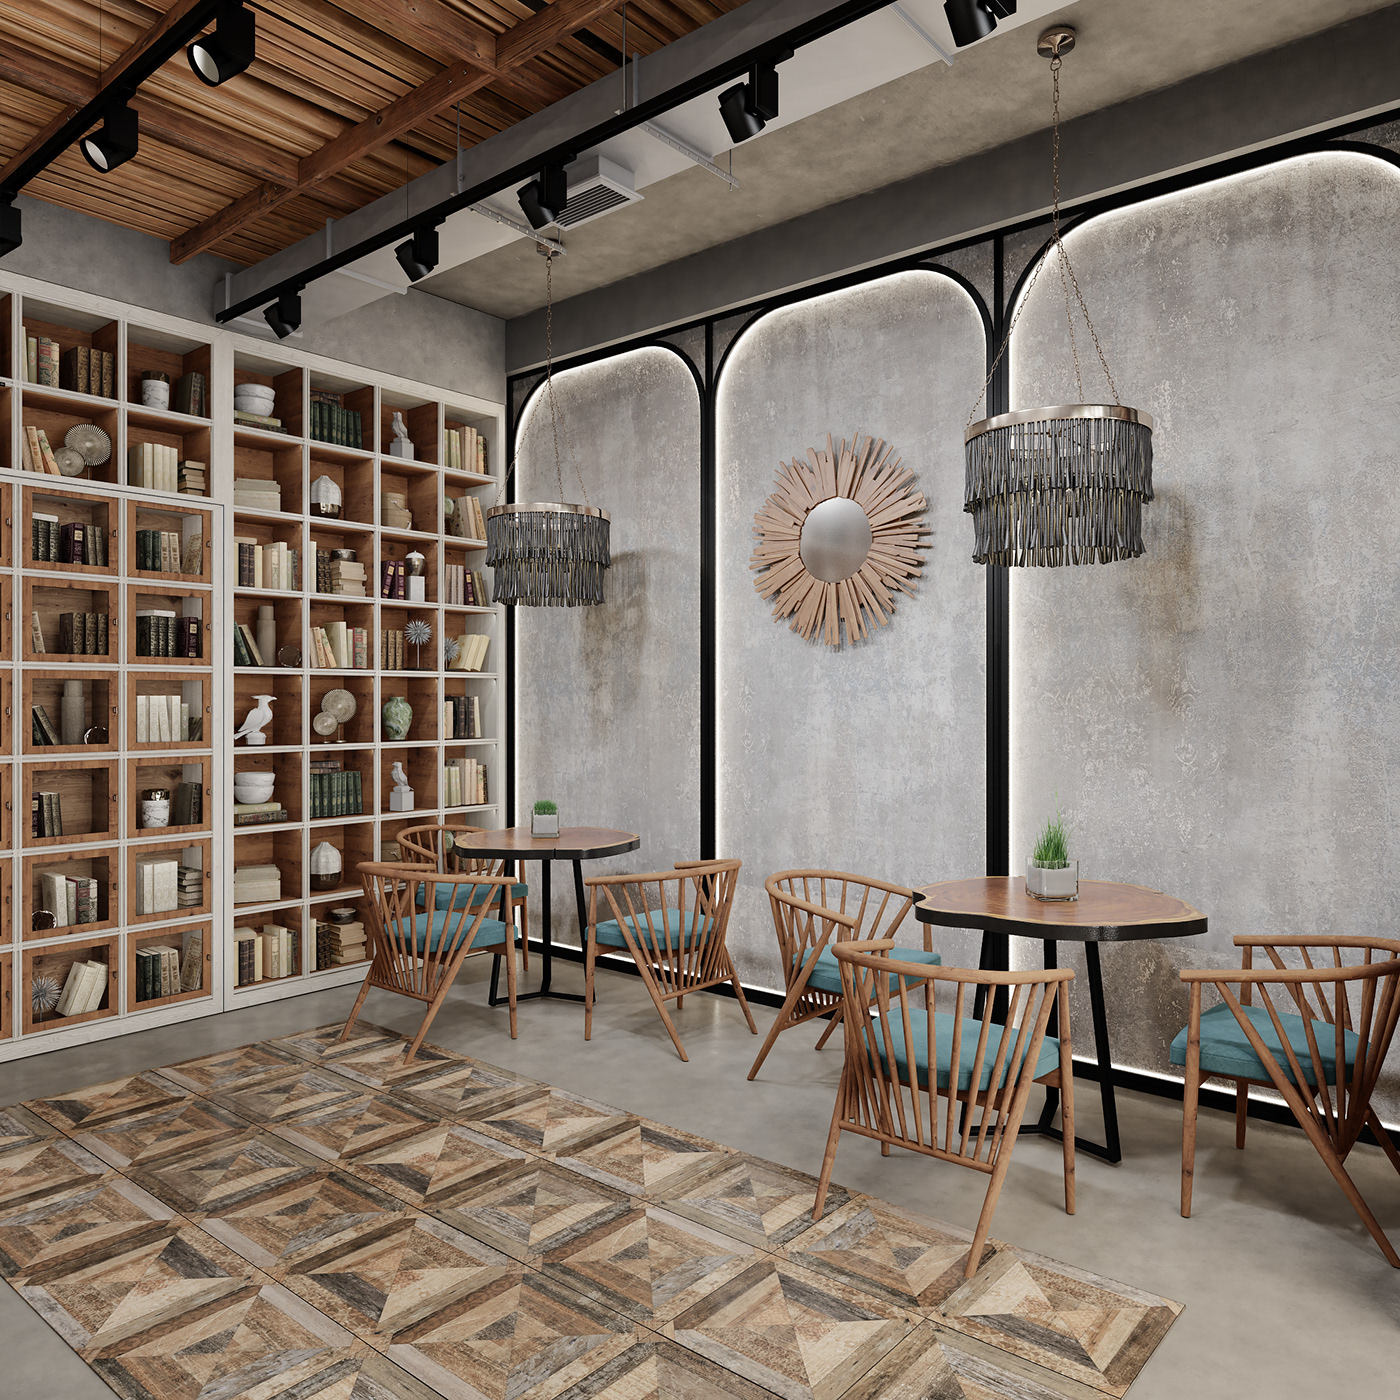 Interior 3ds max interior design  architecture teahouse restaurant hookah hookah bar lounge кальян